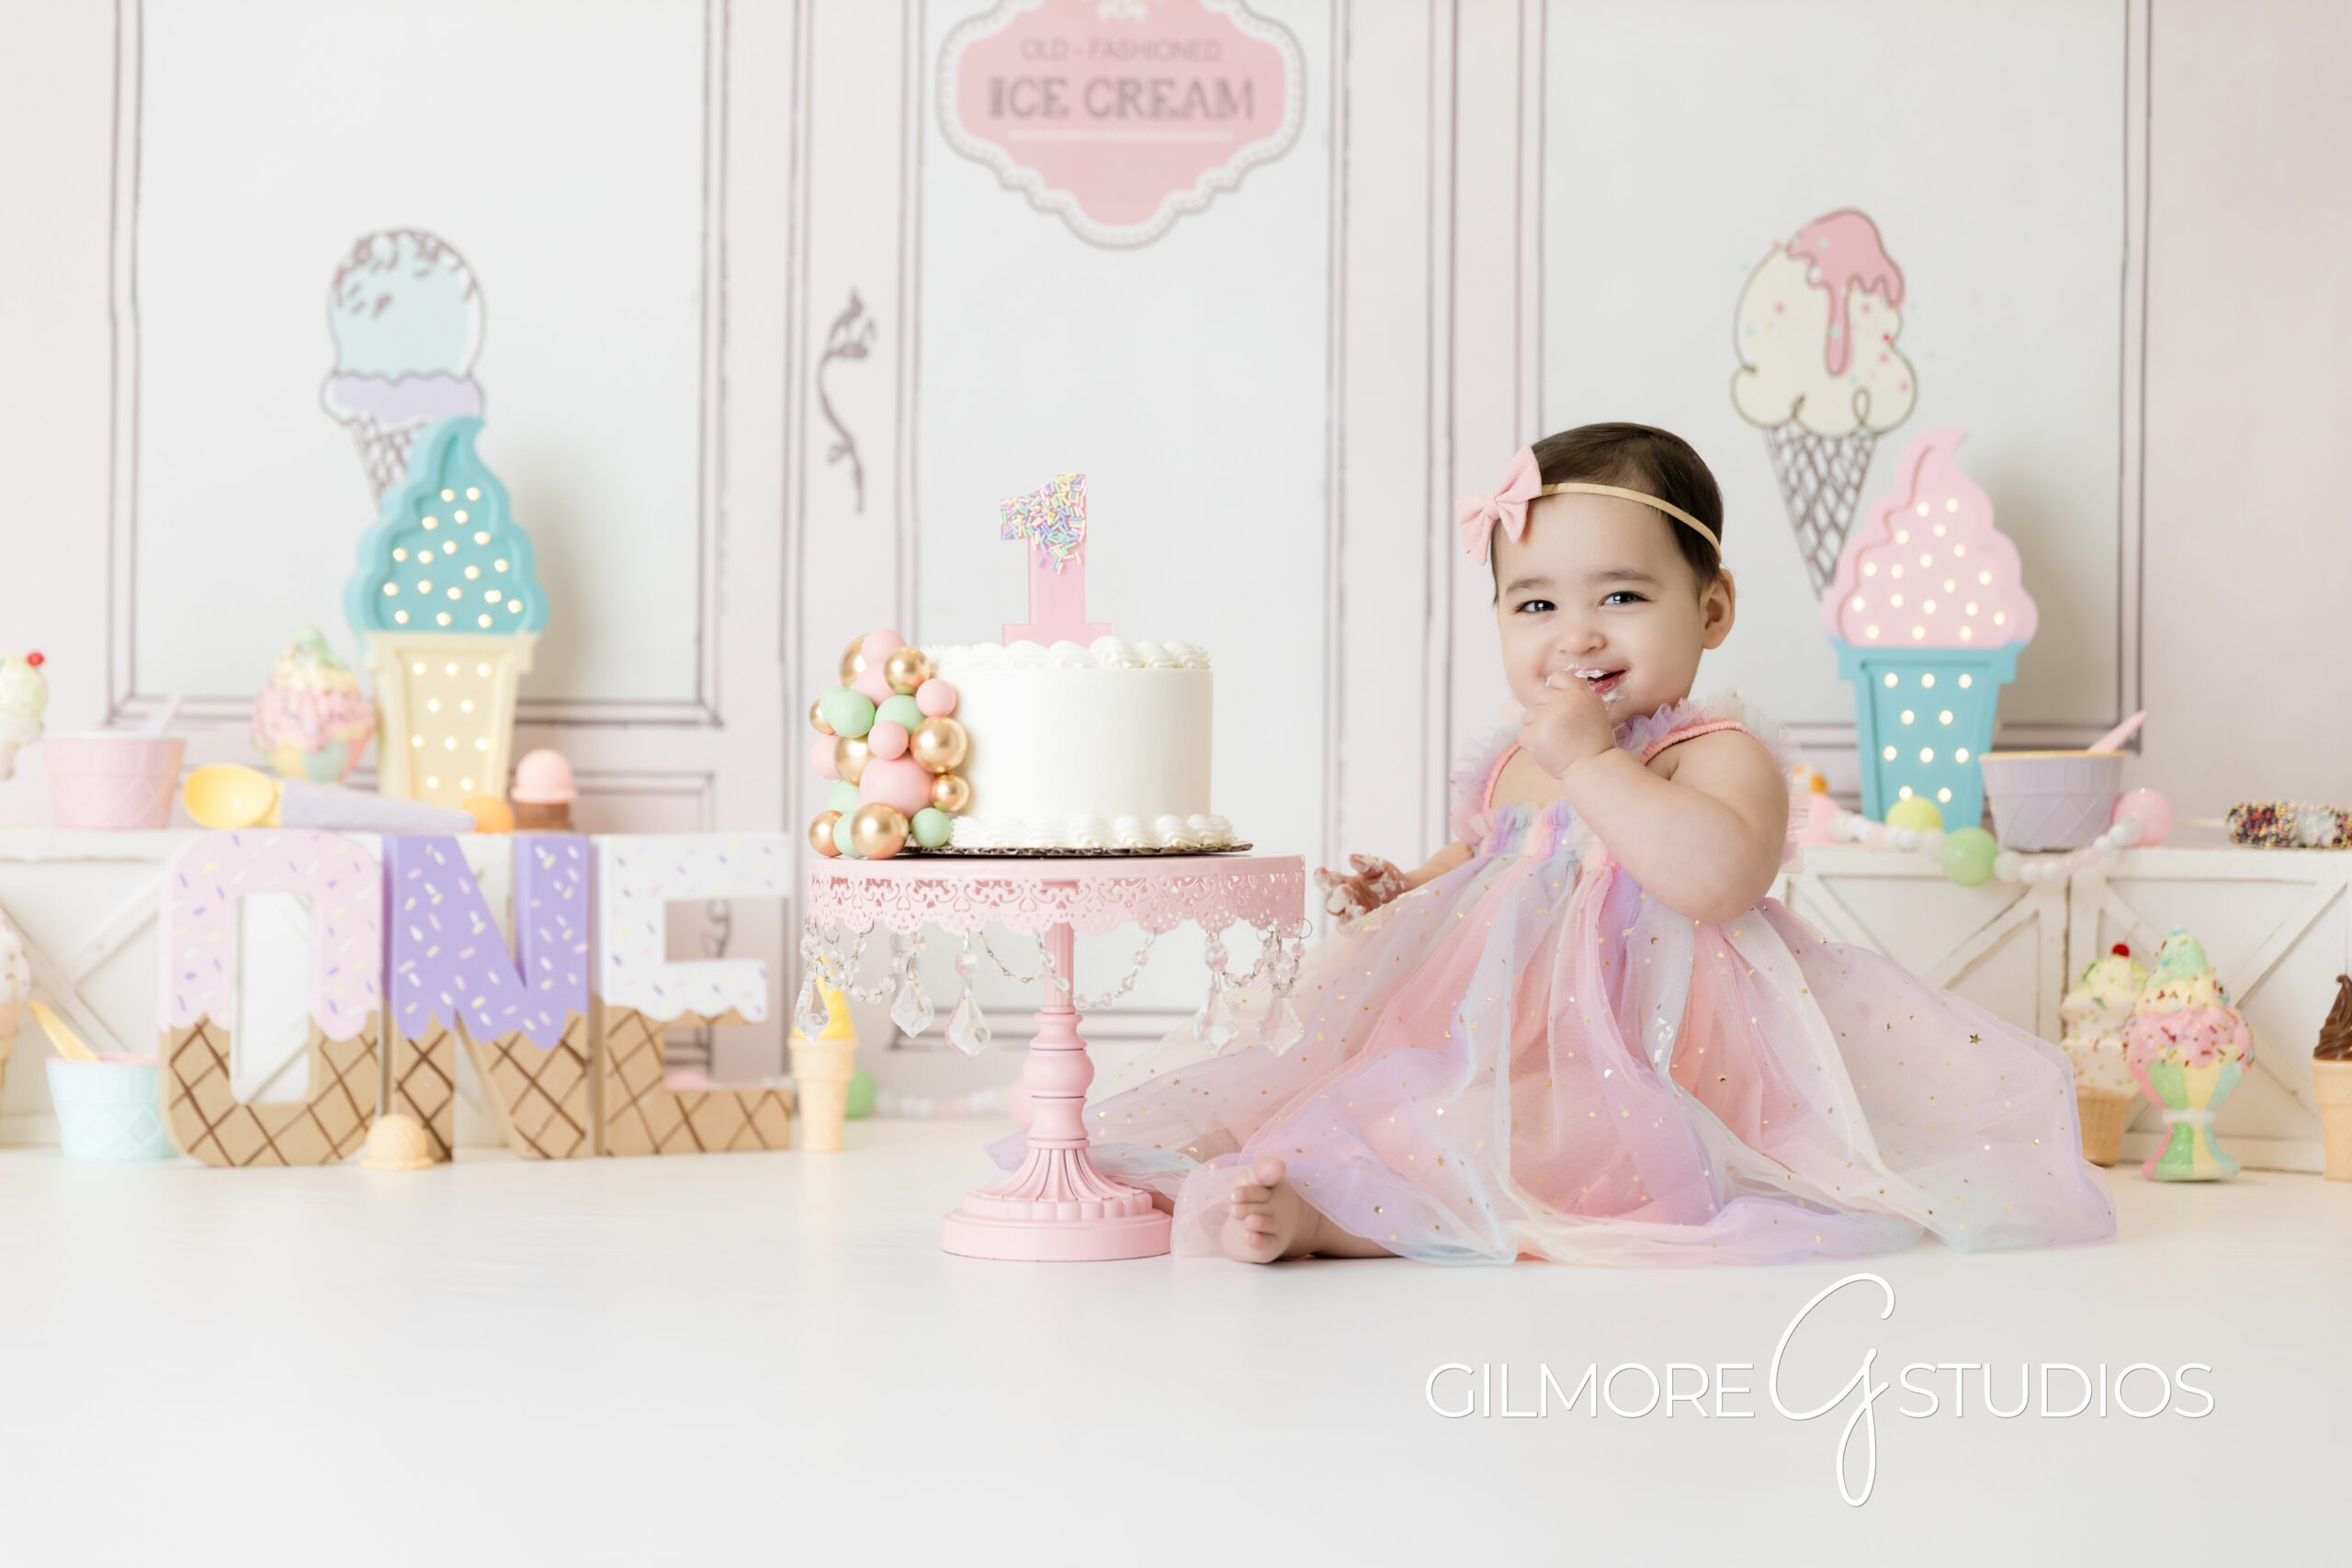 ice cream theme cake Smash, white cake, little girl, birthday, pink dress, pink bow, ice cream parlor, photography, Gilmore Studios